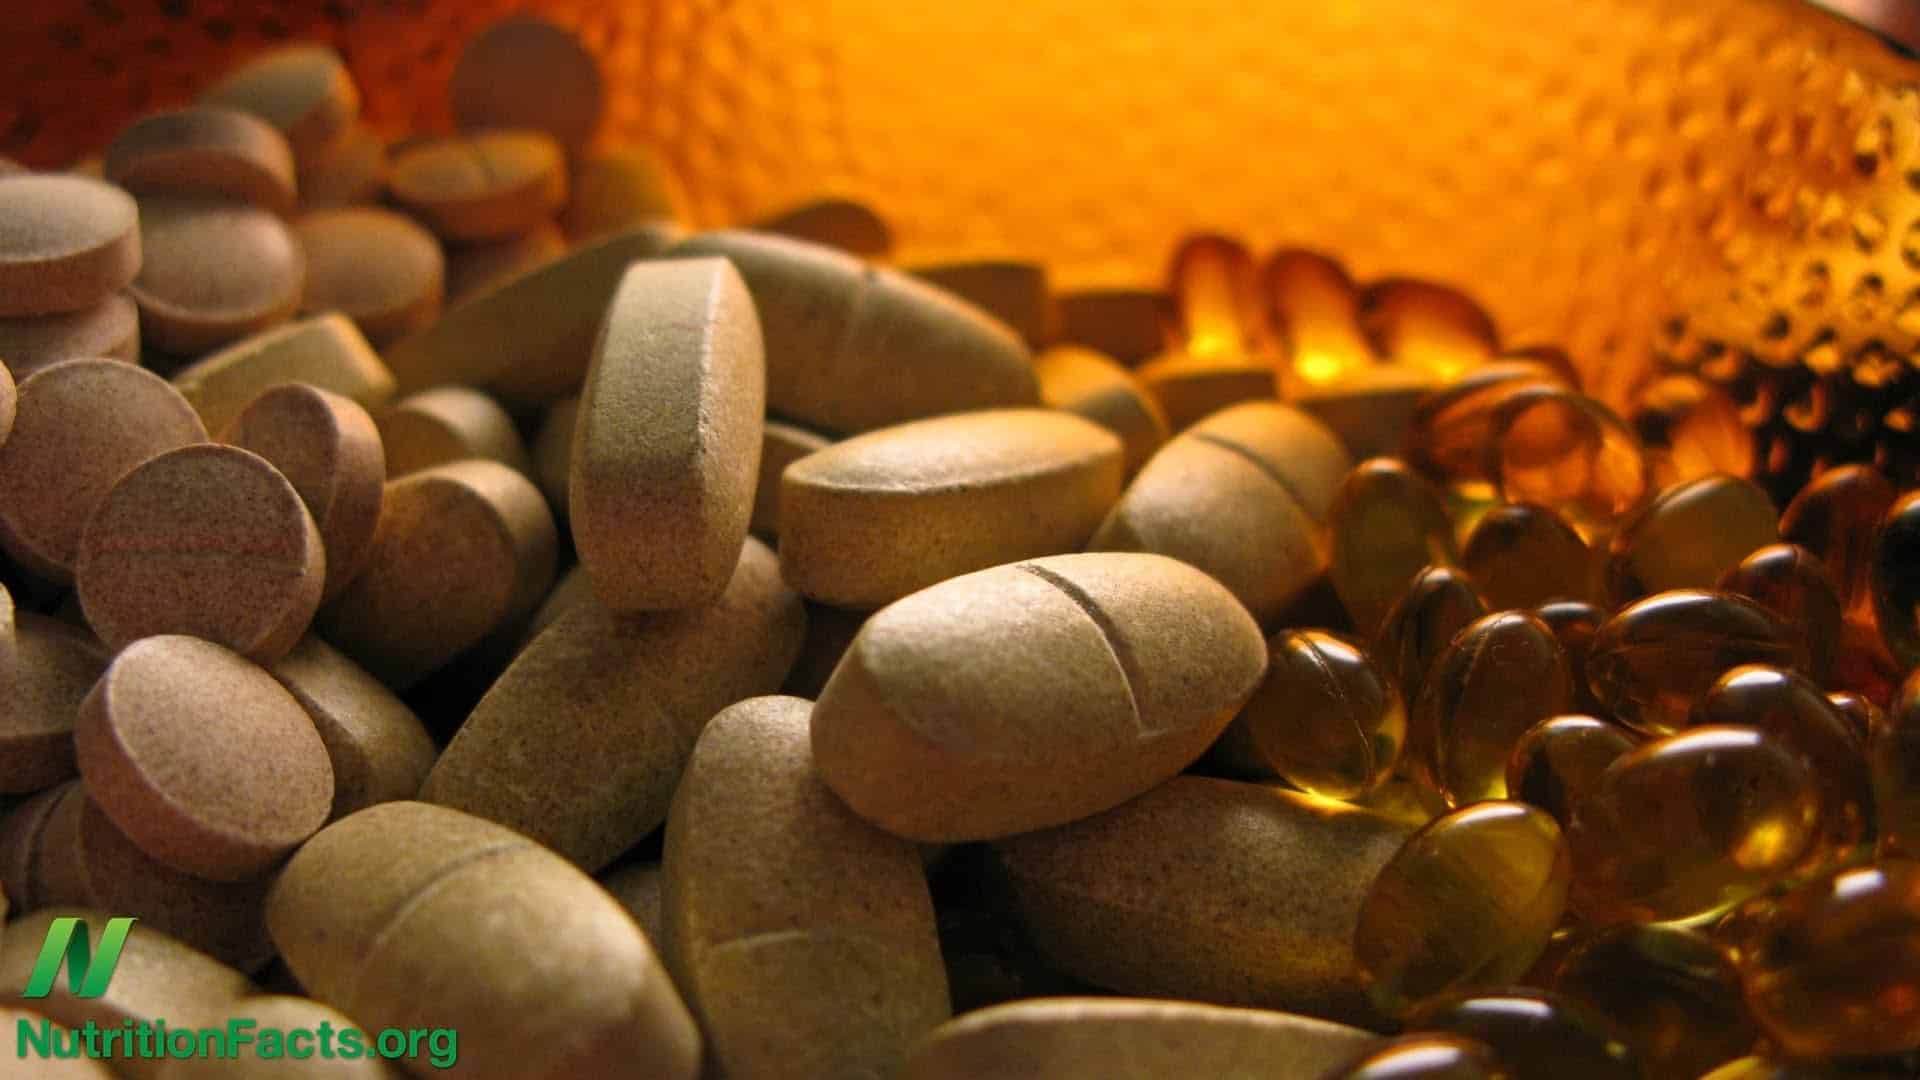 Cancer supplements